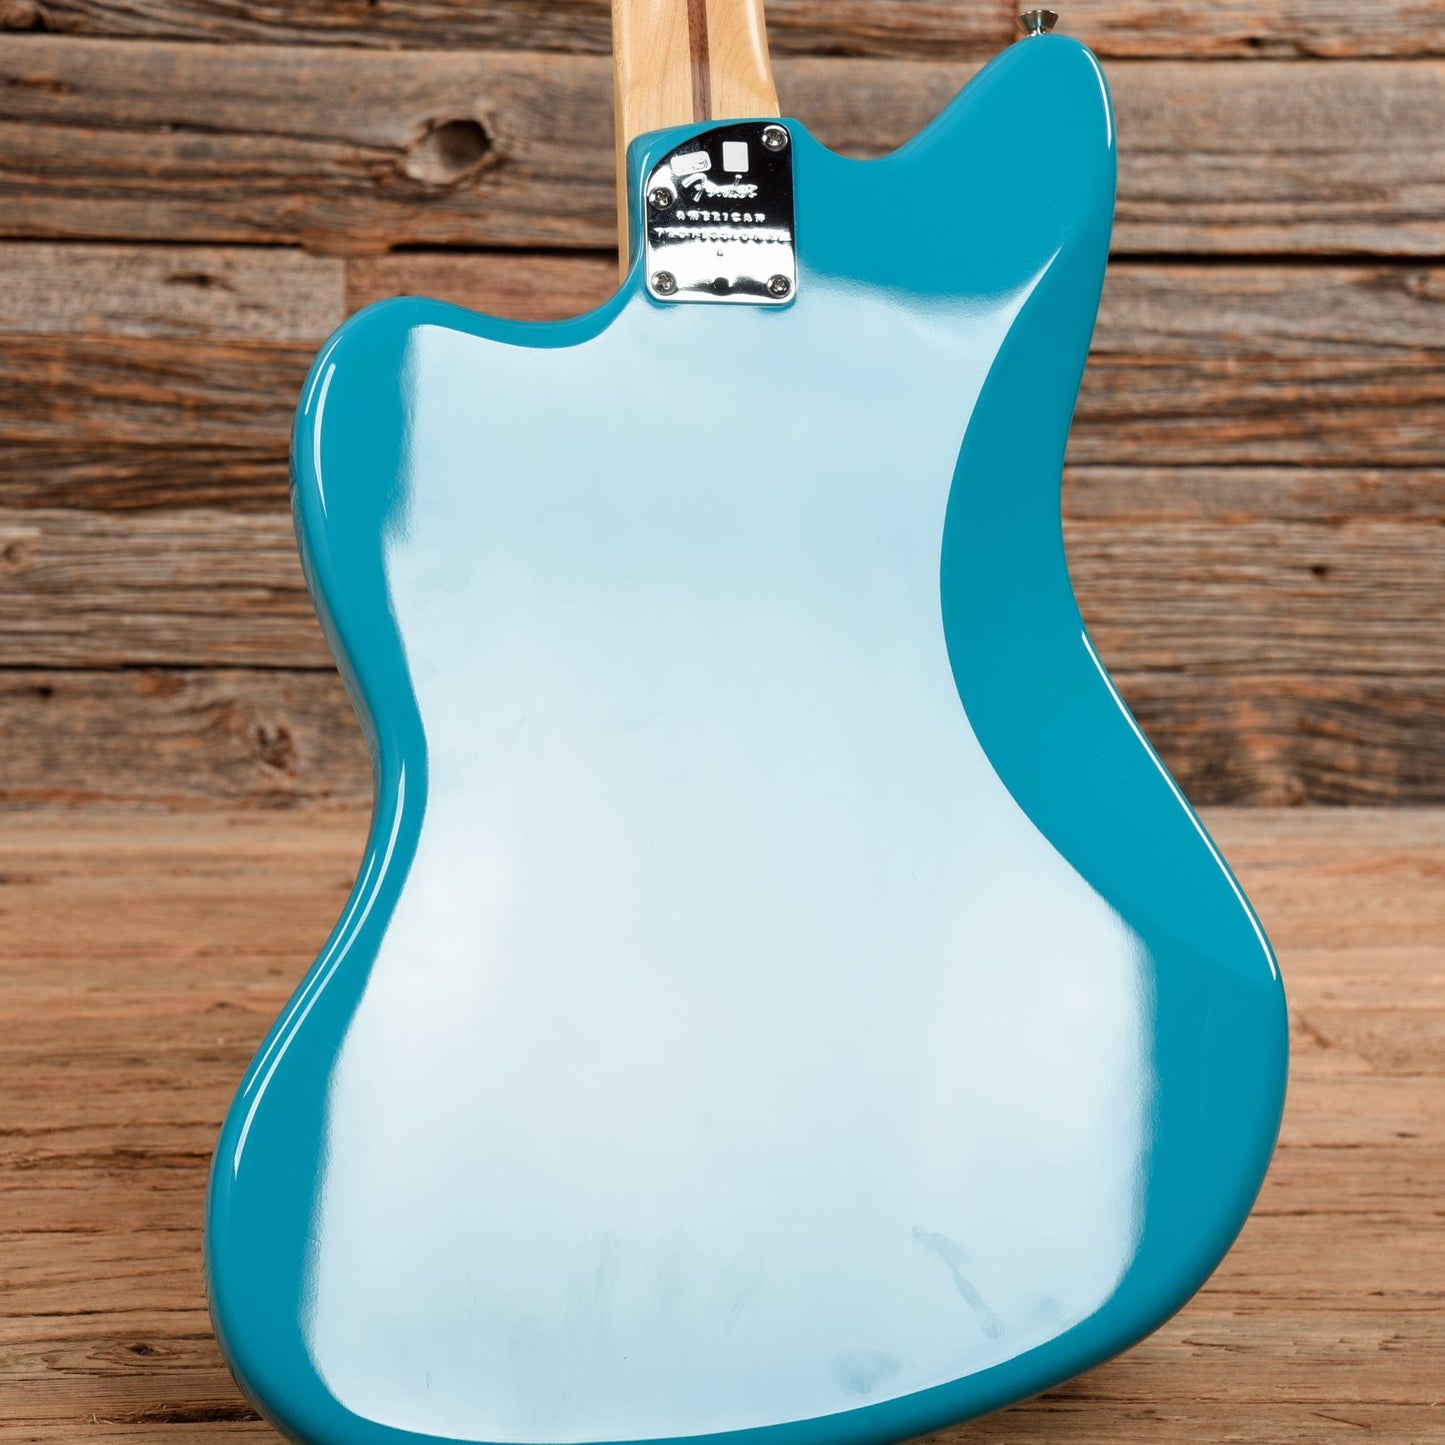 Fender American Professional II Jazzmaster Miami Blue 2021 Electric Guitars / Solid Body